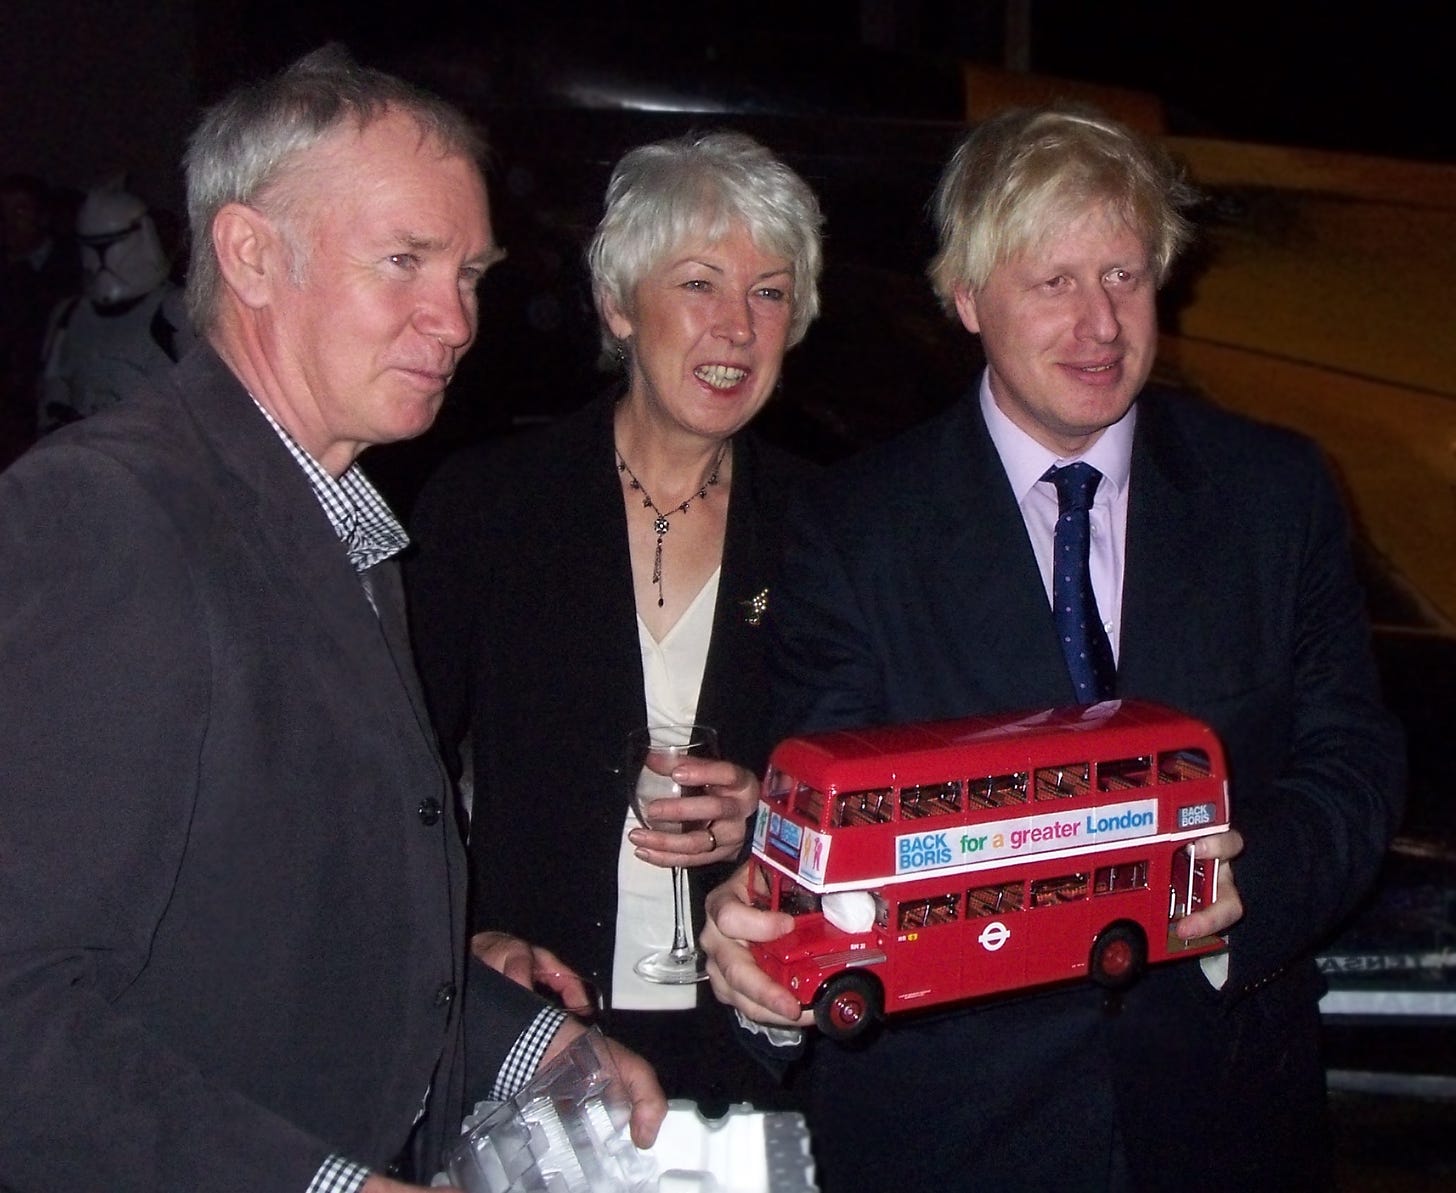 File:Boris Johnson -holding a red model bus -2007.jpg - Wikipedia